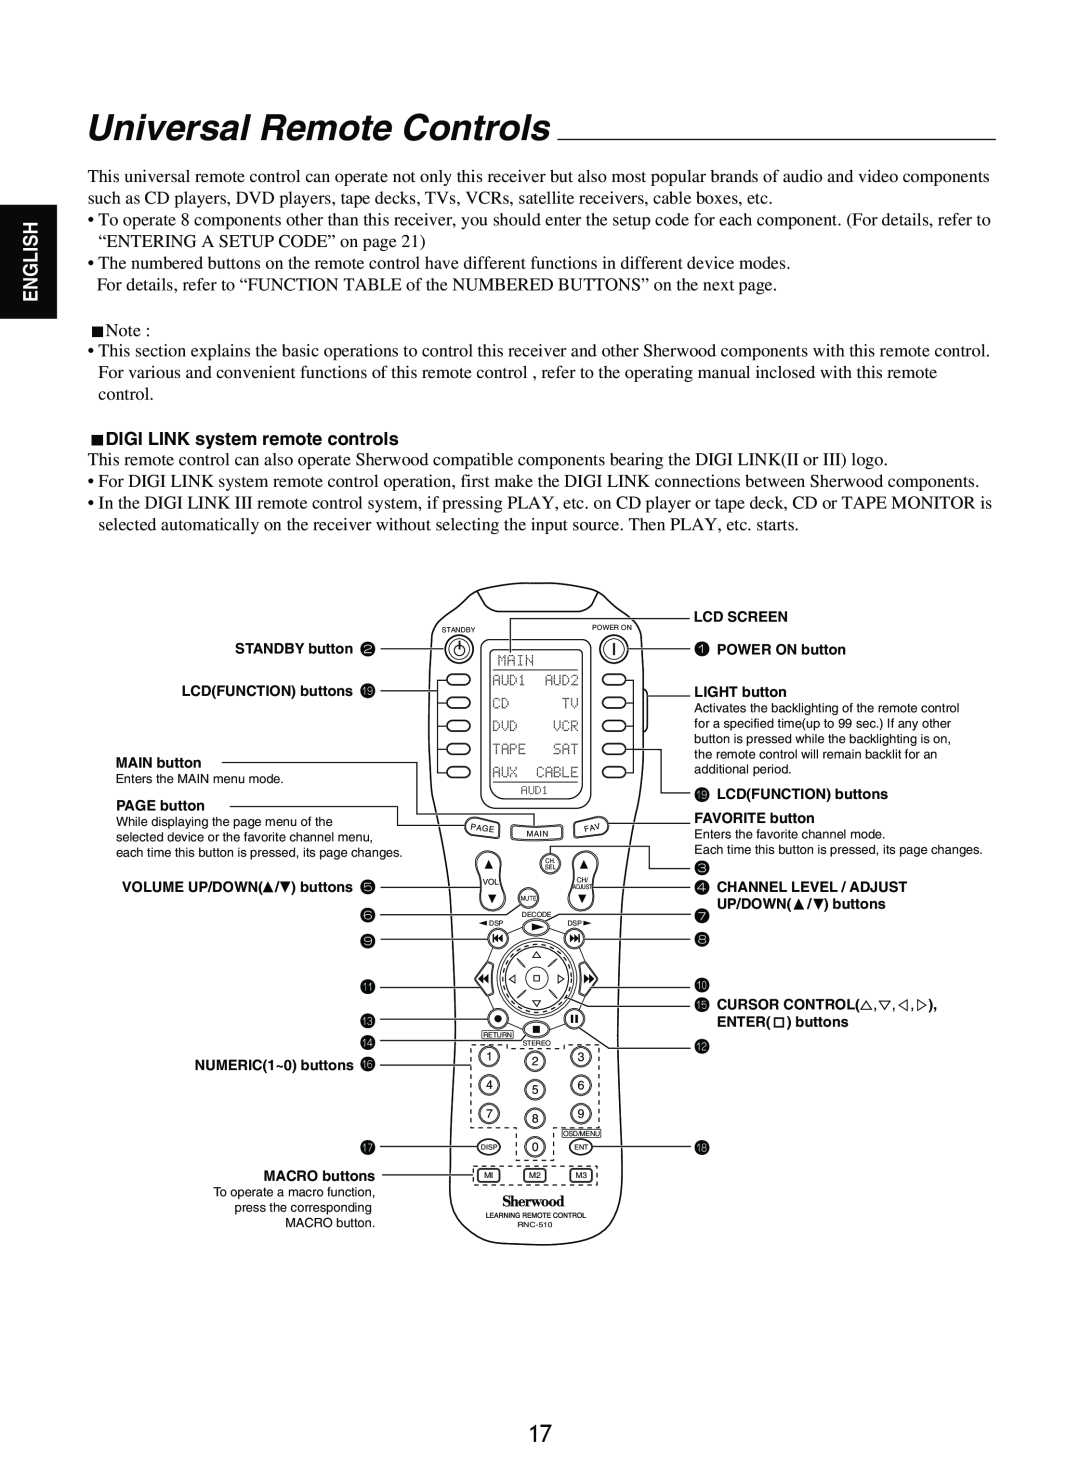 Sherwood R-965 manual Universal Remote Controls, DIGI LINK system remote controls, English 